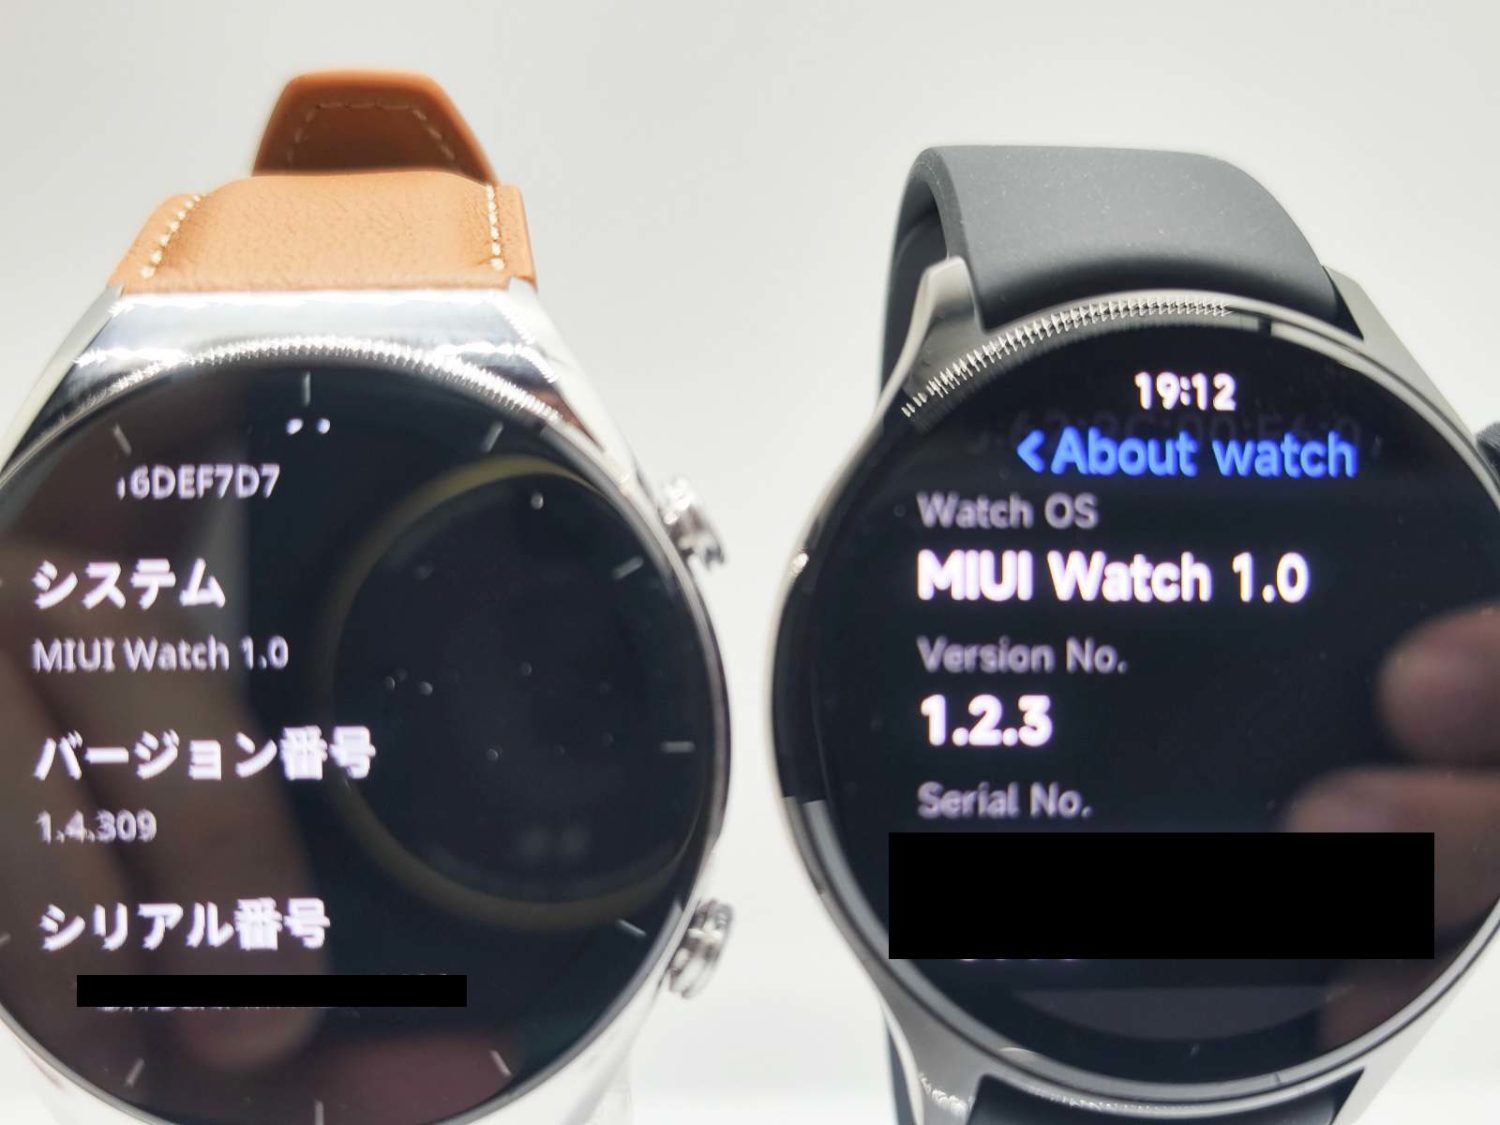 MIUI Watch 1.0